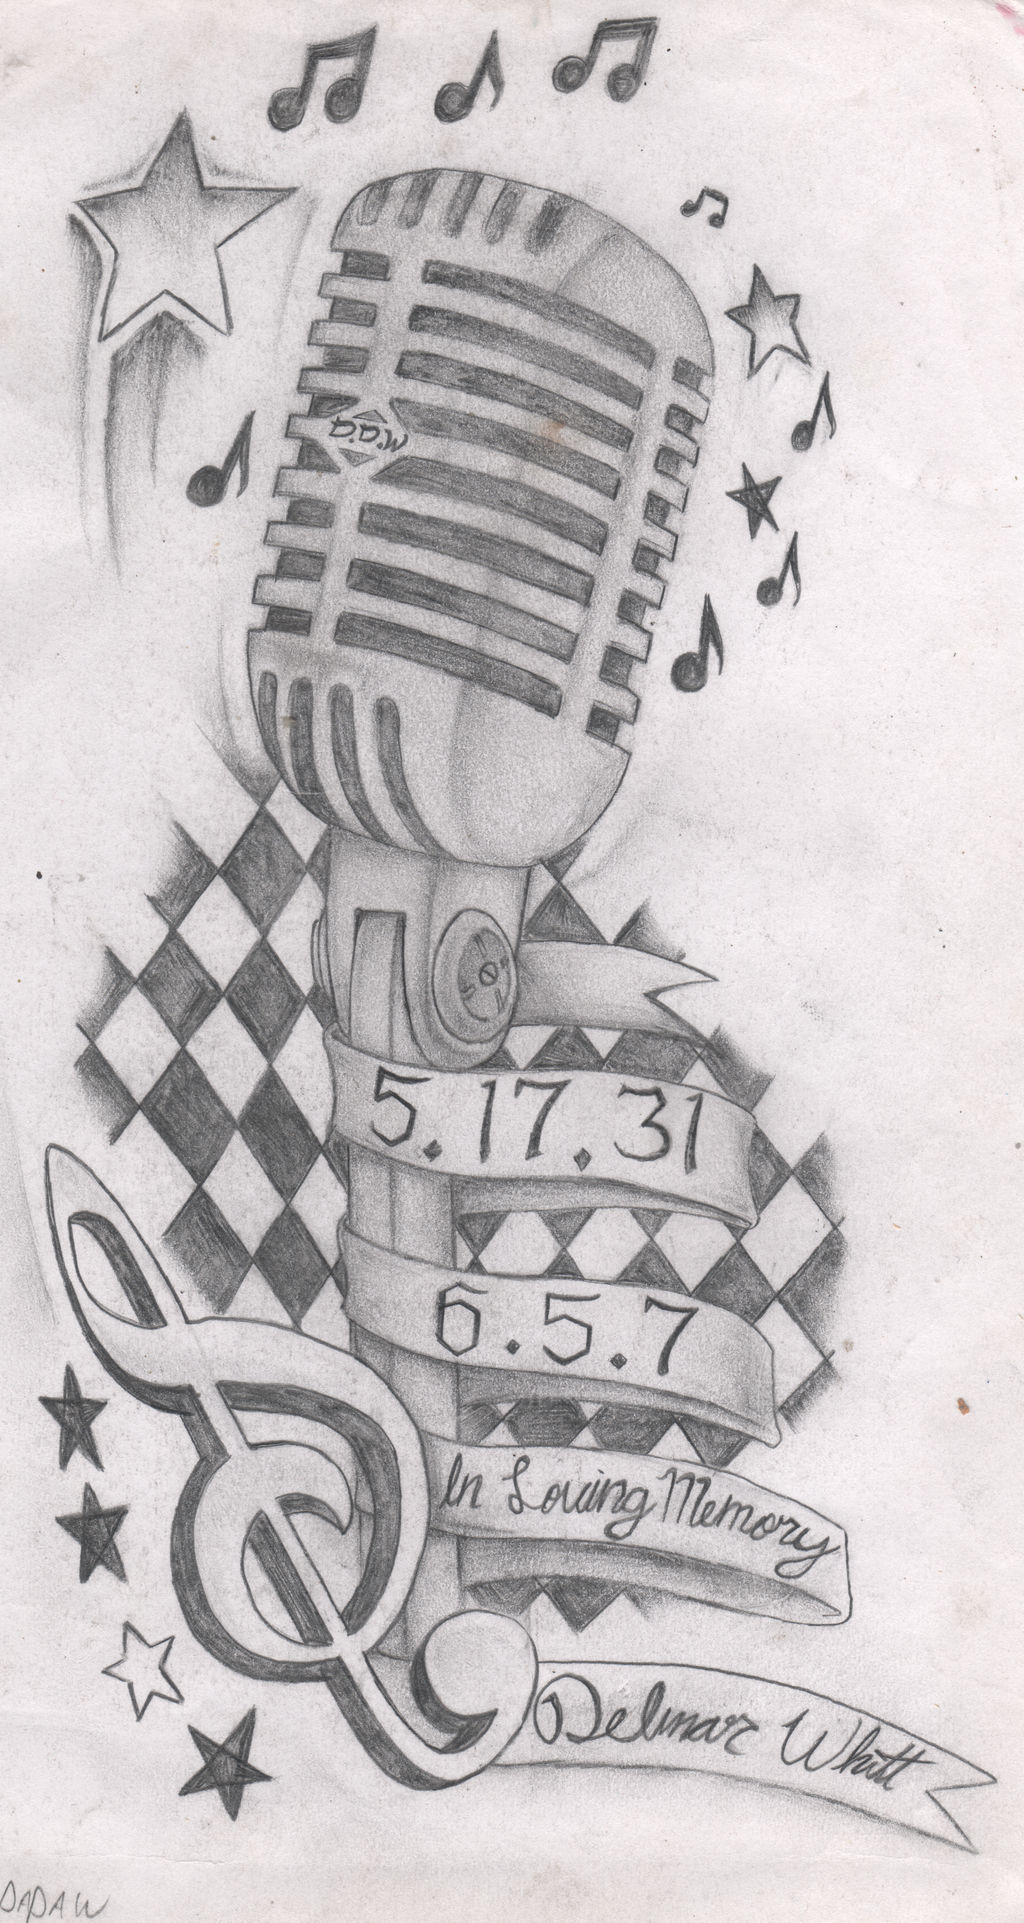 Microphone Tattoo Design by DillonGetWhittIt on DeviantArt